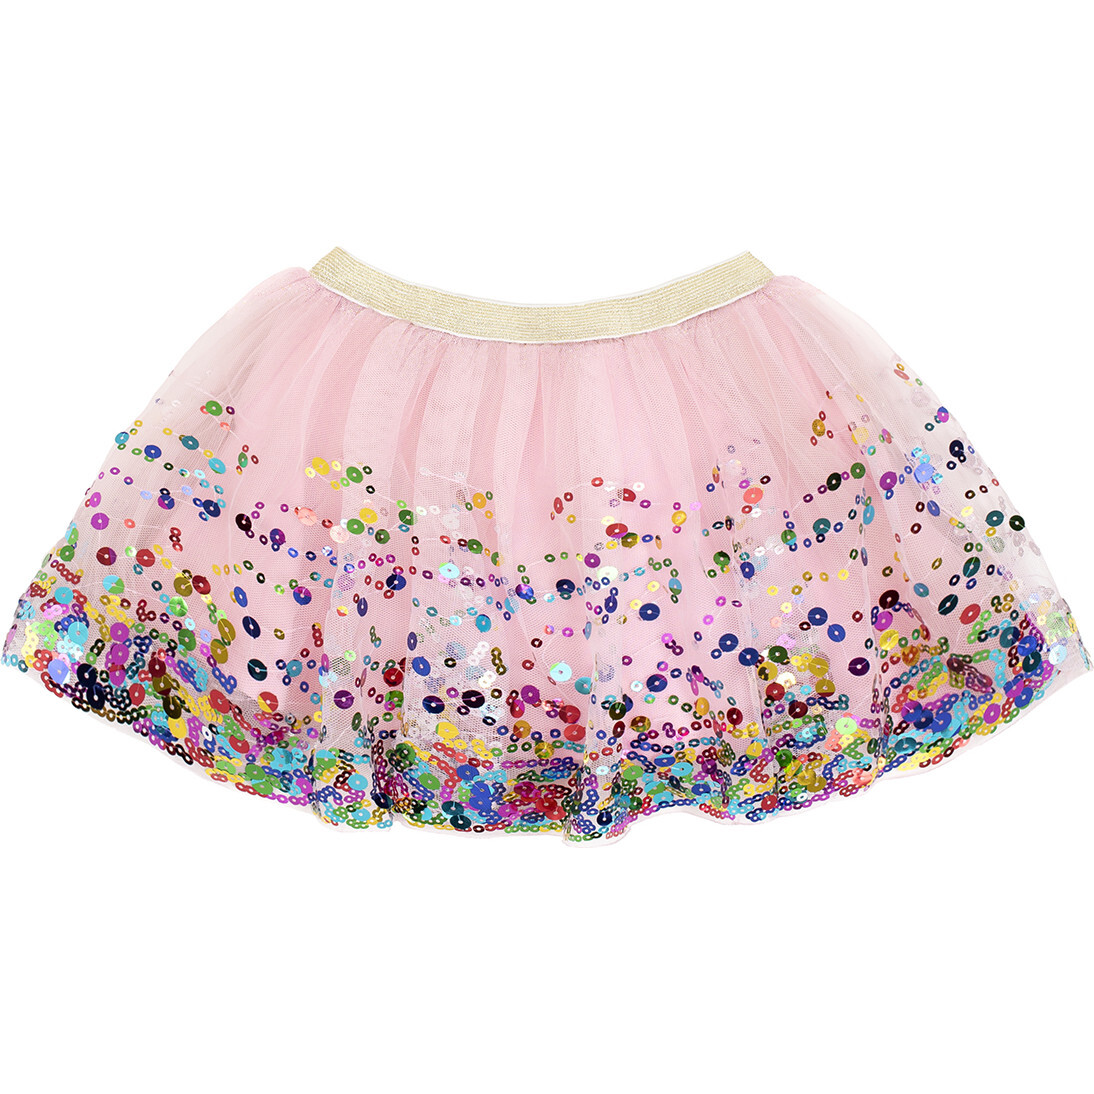 Confetti Tutu, Pink - Sweet Wink Skirts